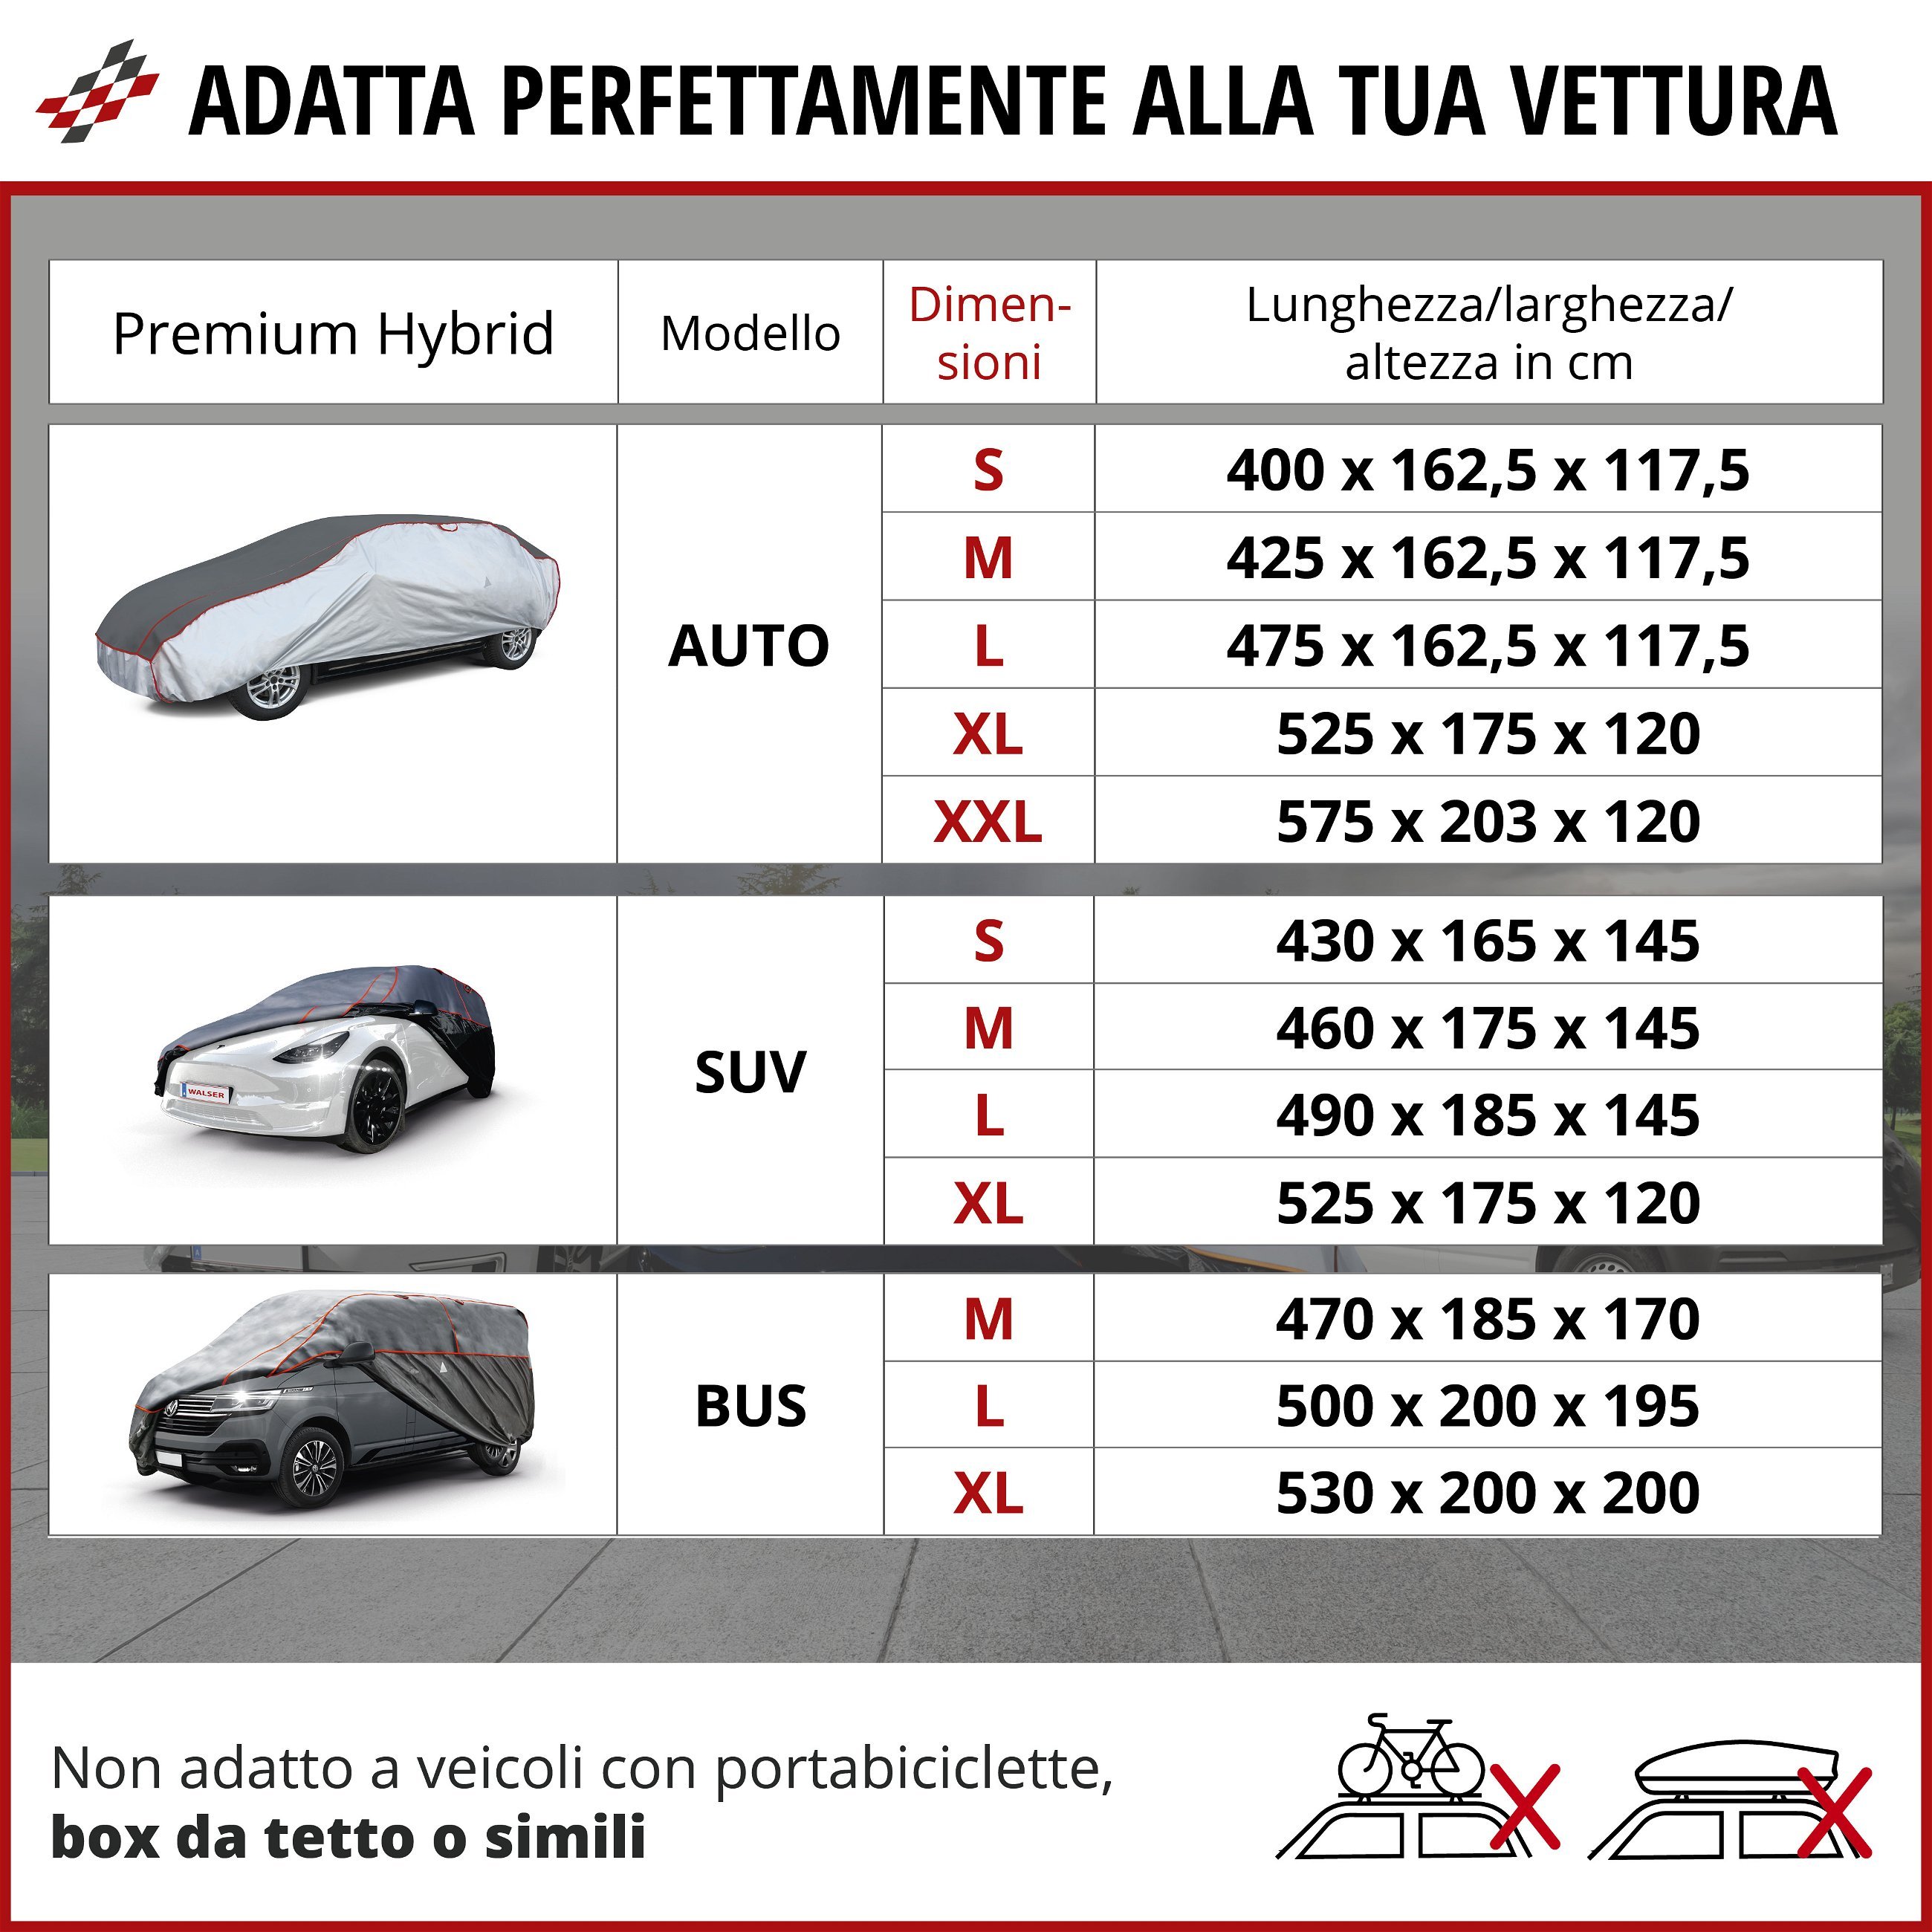 Telo Copriauto antigrandine Premium Hybrid SUV misura XL